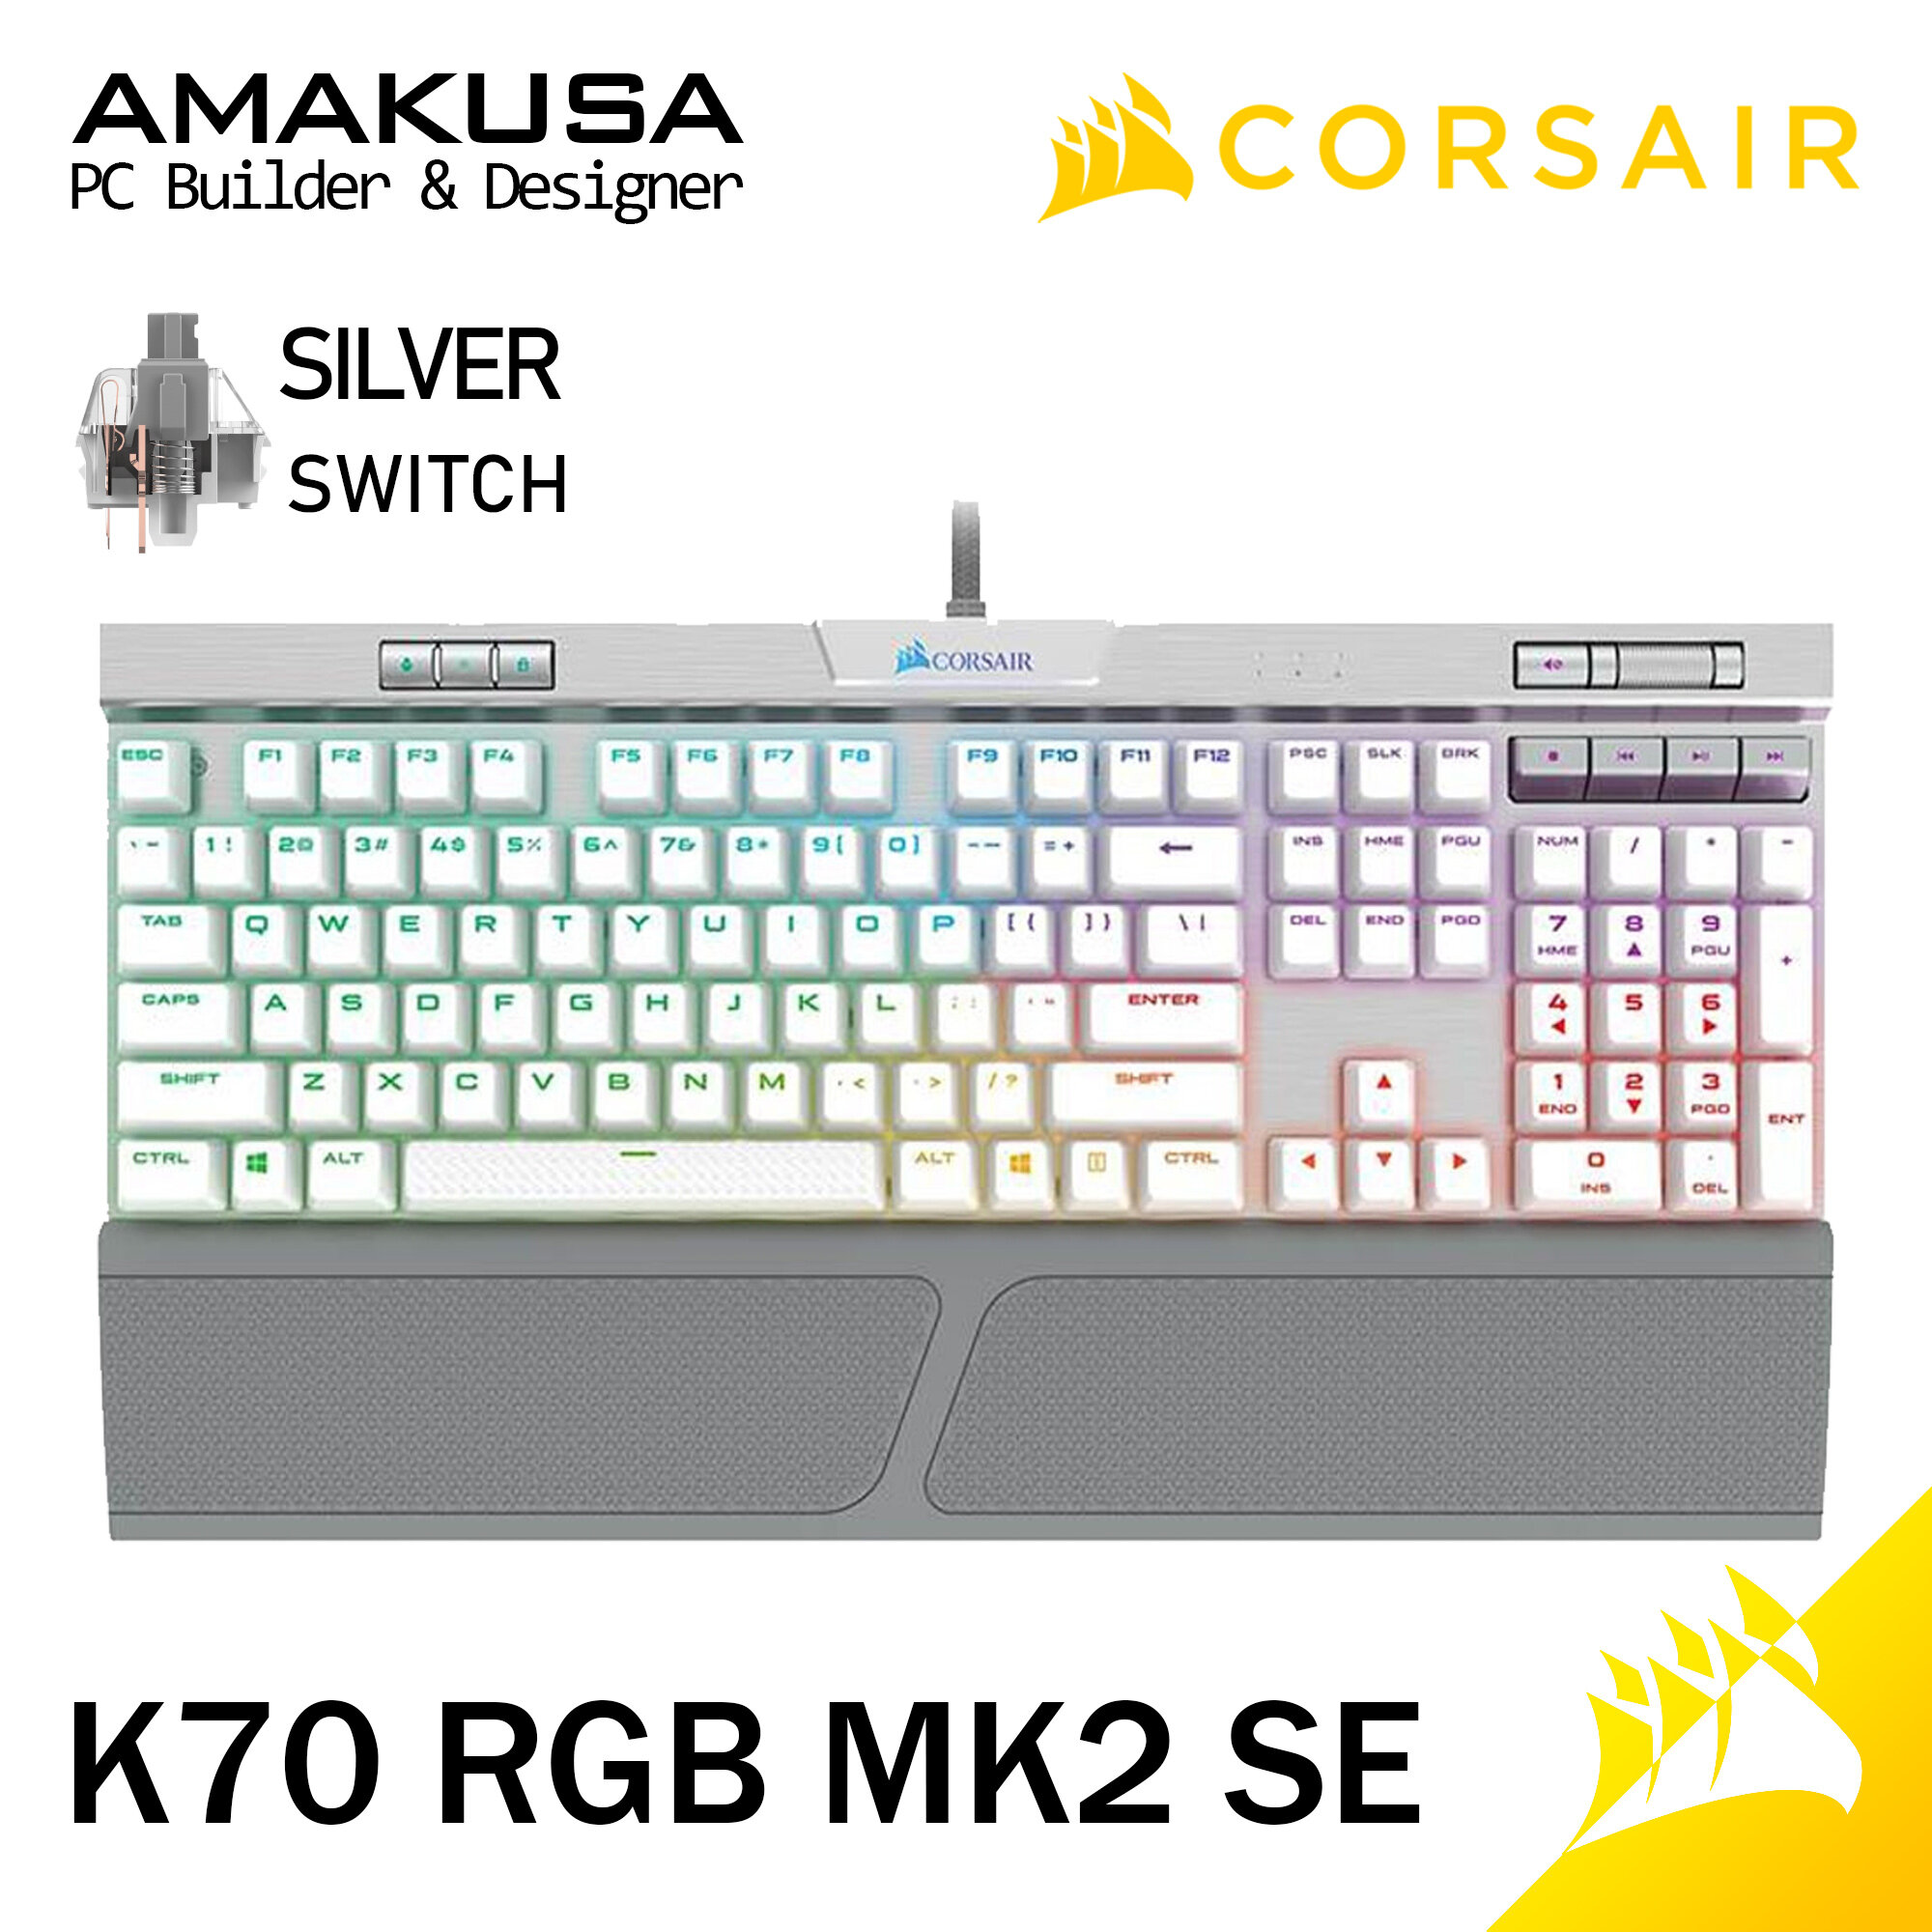 Corsair K70 RGB MK2 SE White Mechanical Gaming Keyboard iCUE Cherry MX Linear Speed Key Switches Frame Port Media Volume Detachable Palm Wrist Rest USB Pass Through Keycap Tool